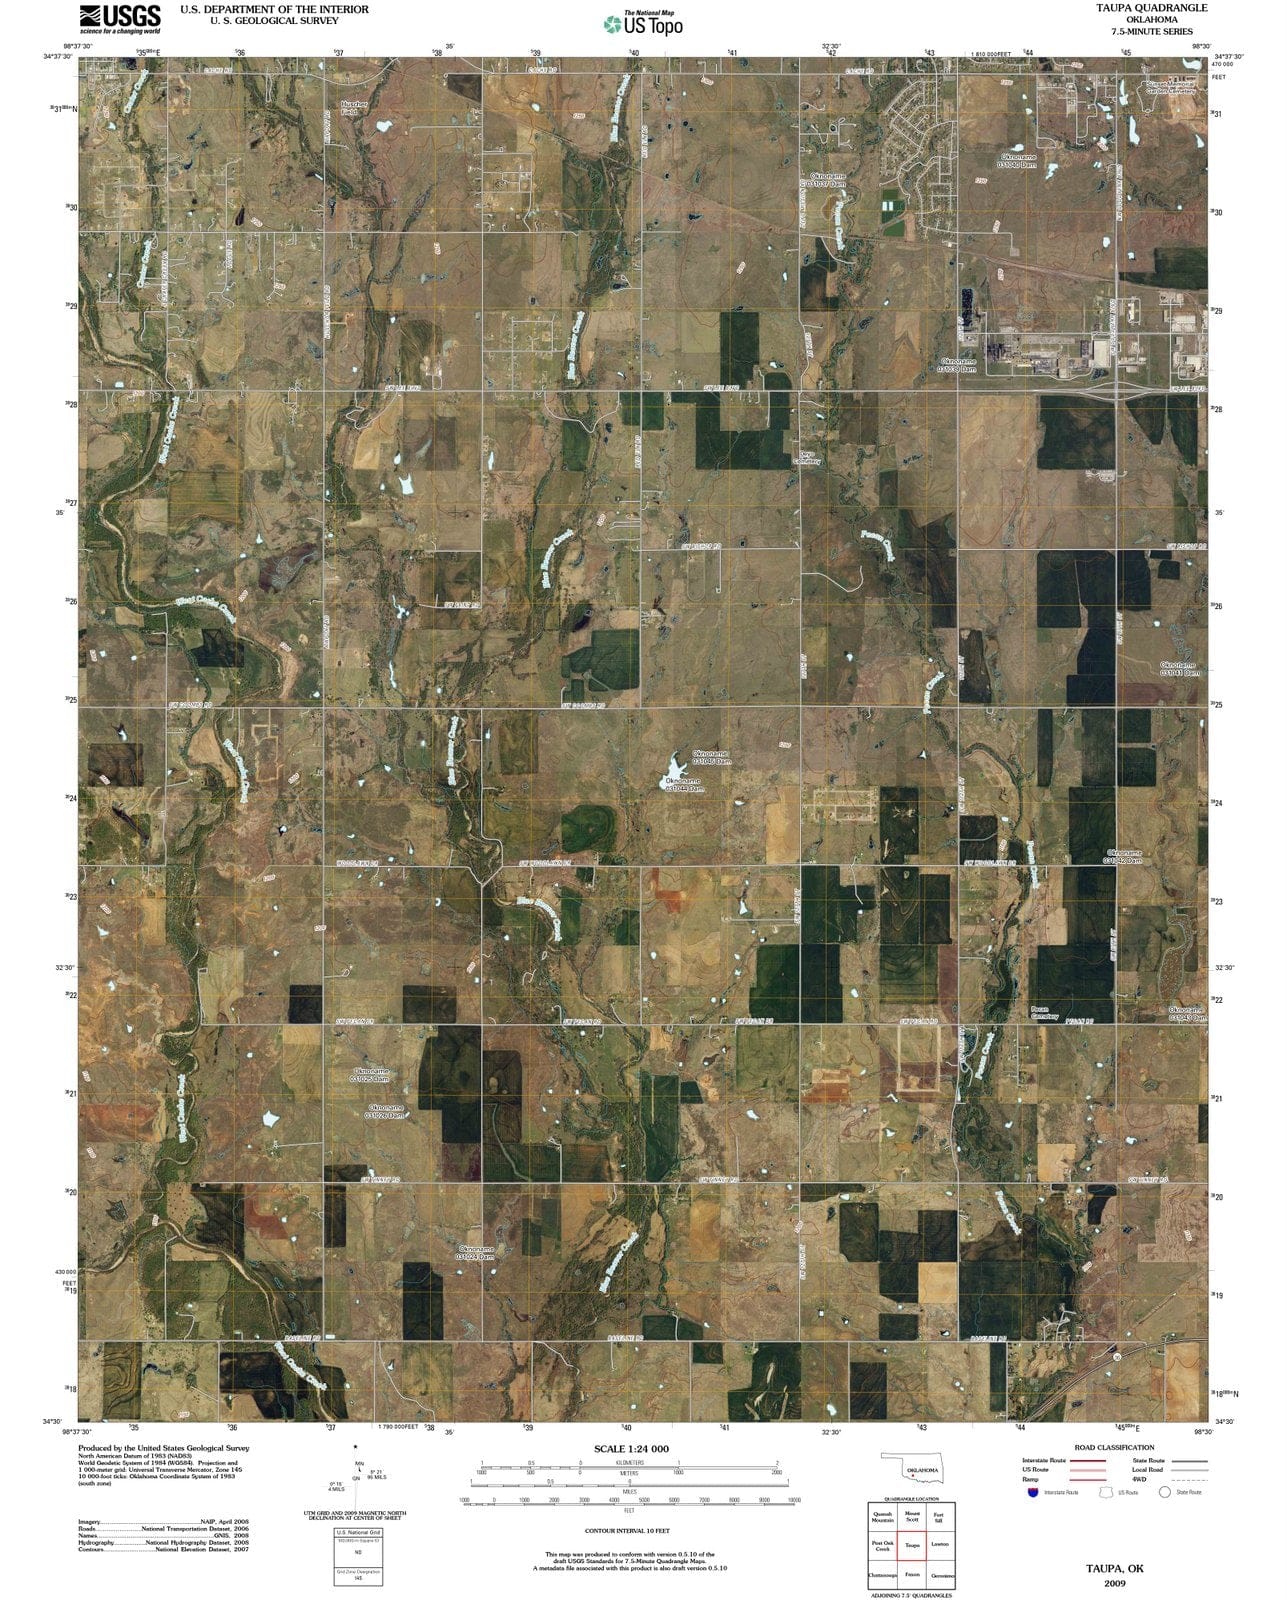 2009 Taupa, OK - Oklahoma - USGS Topographic Map